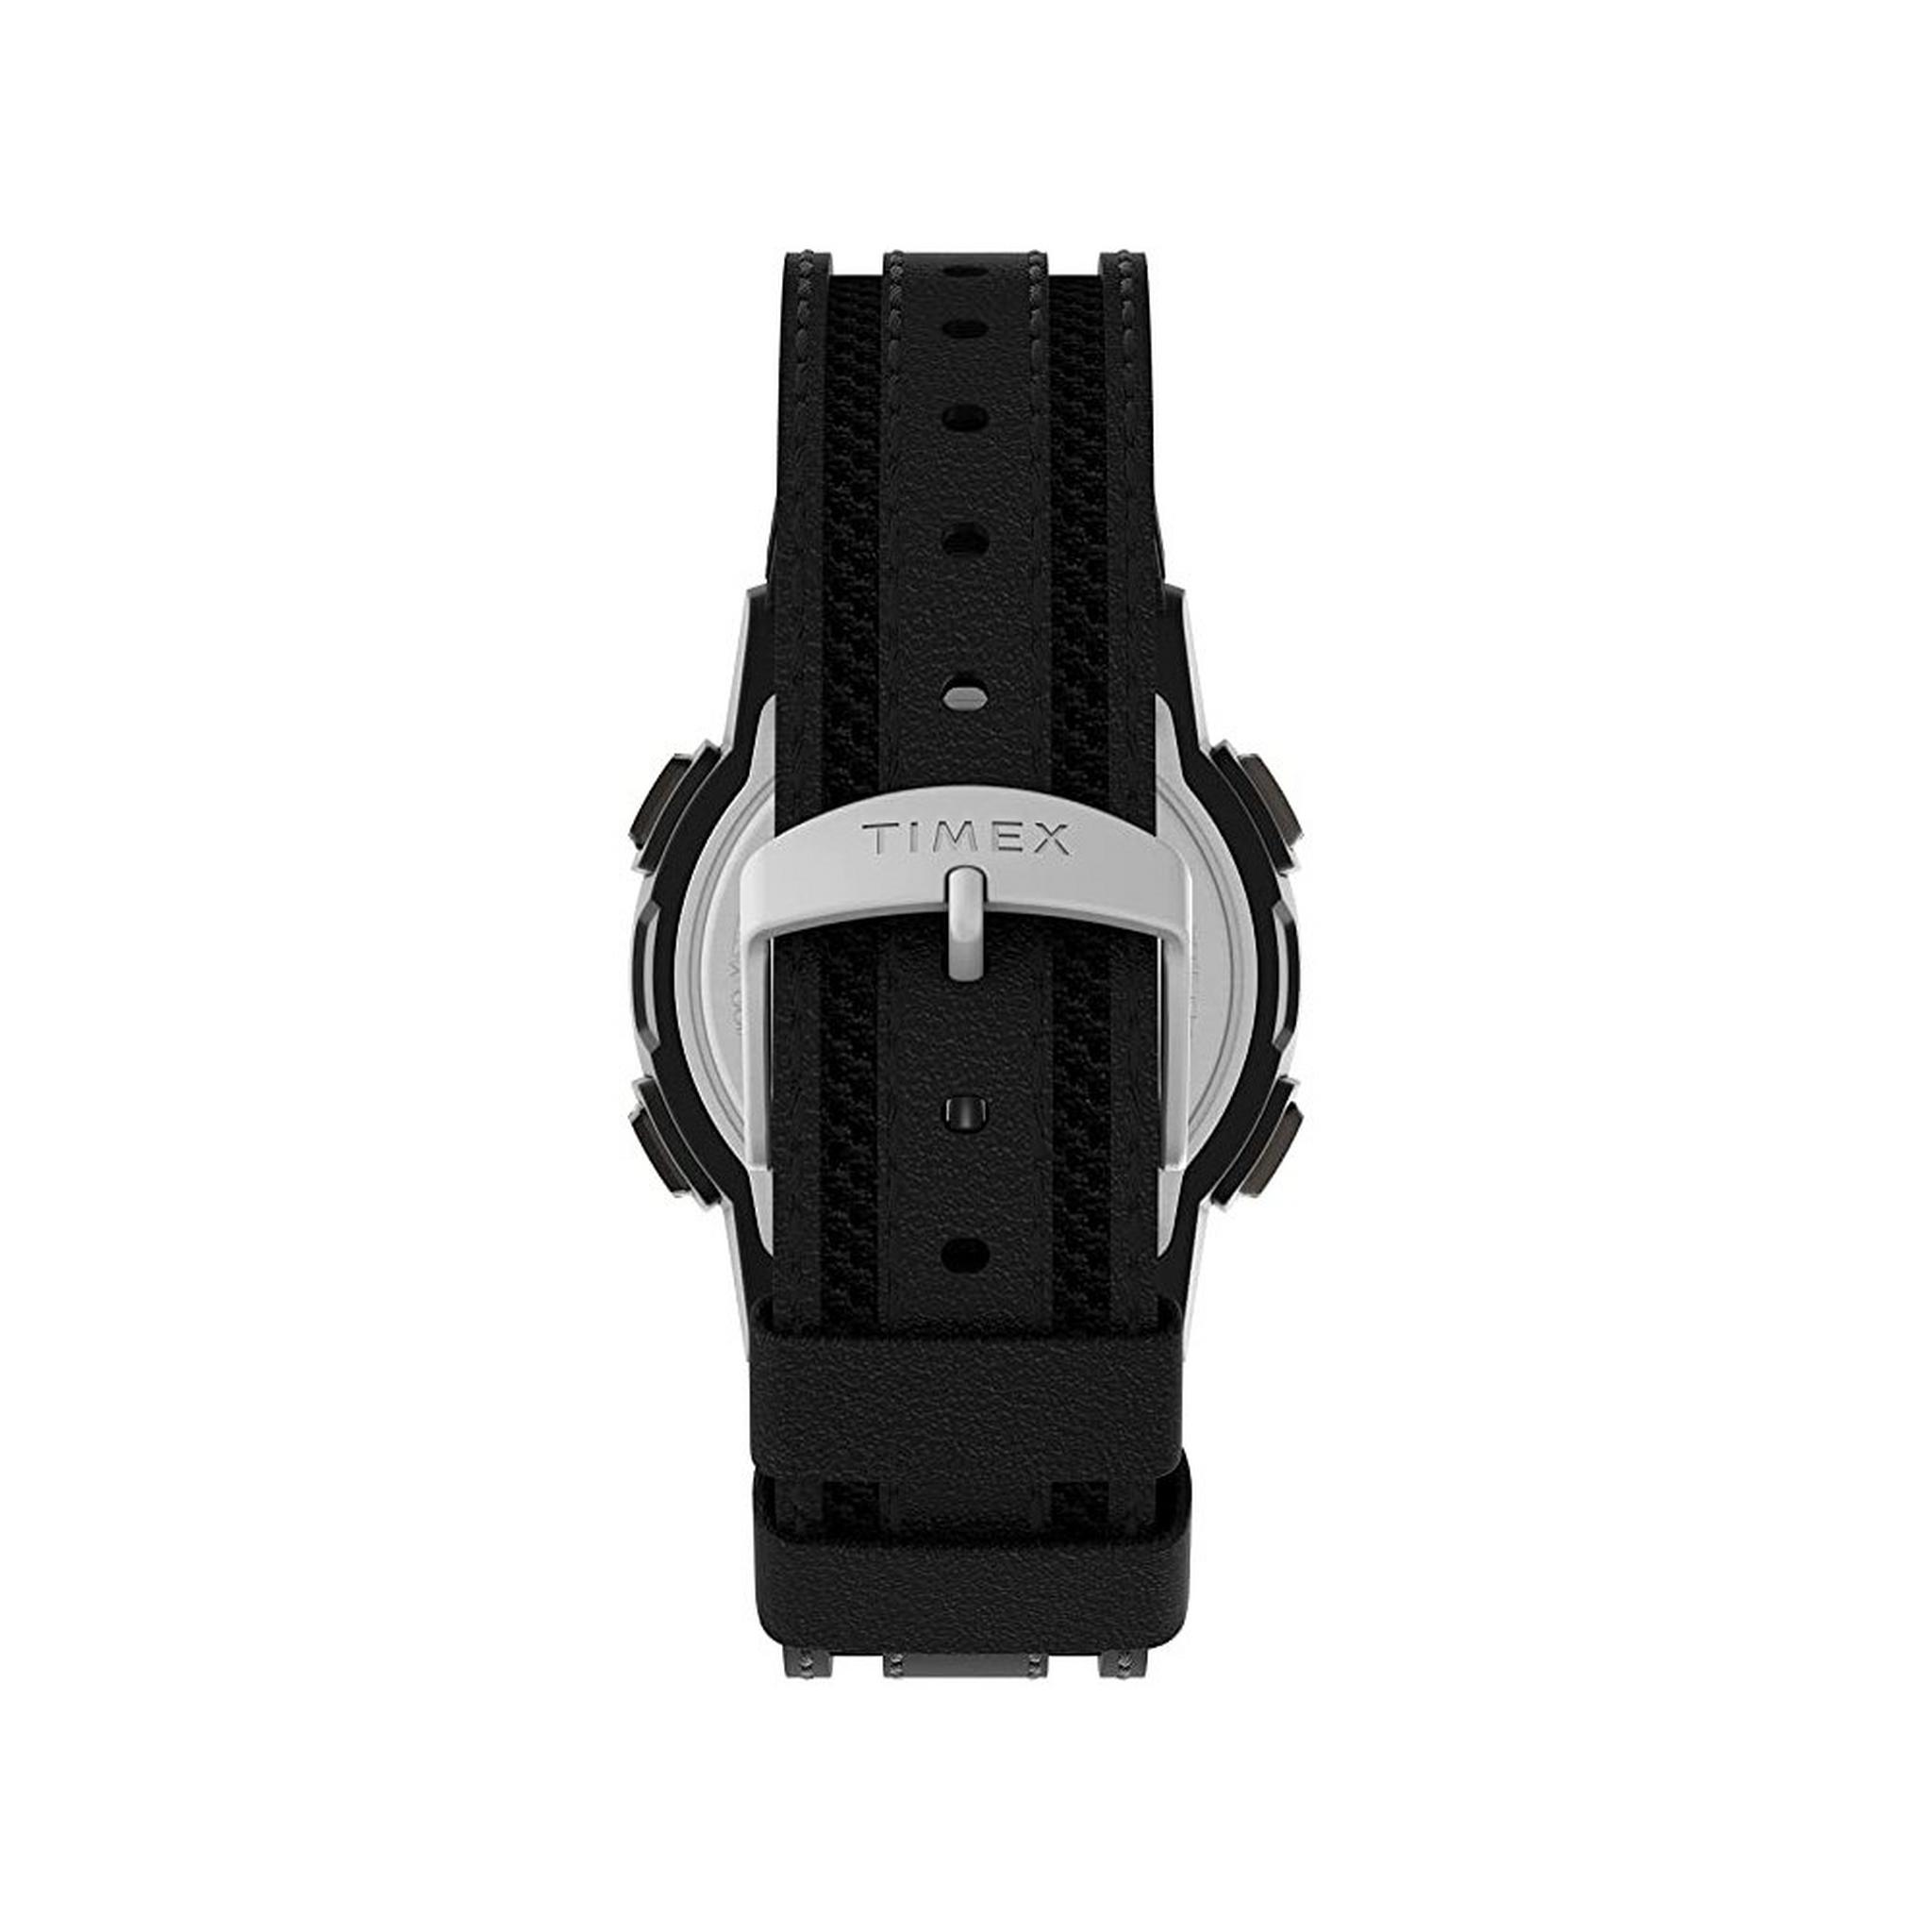 ساعة اكسبديشن للرجال من تايمكس، رقمية ، 41 مم ، حزام جلدي ، TW4B25200 - أسود